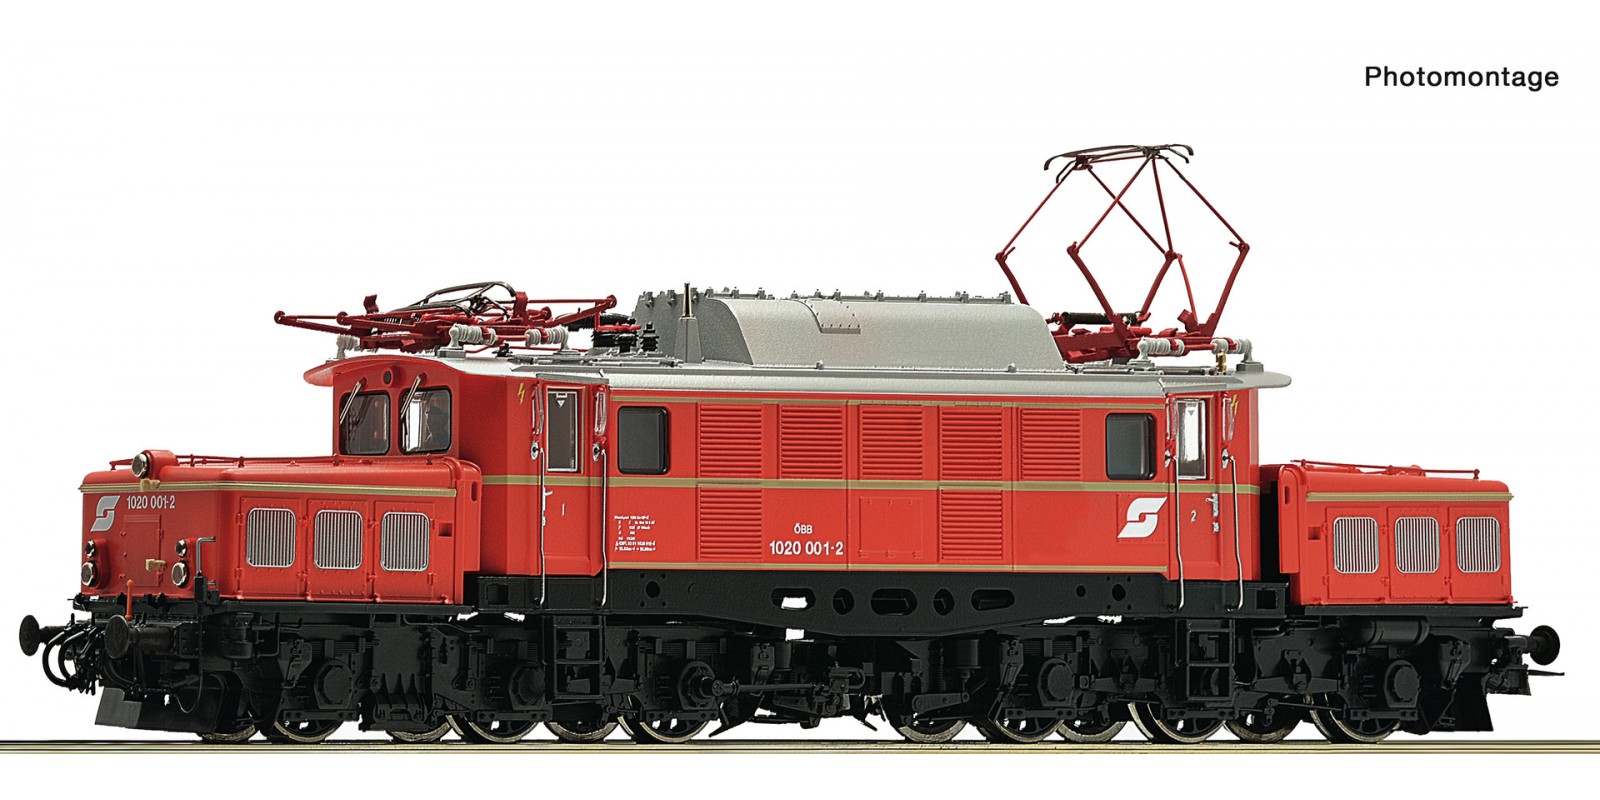 RO7500009 Electric locomotive 1020 001-2 ÖBB